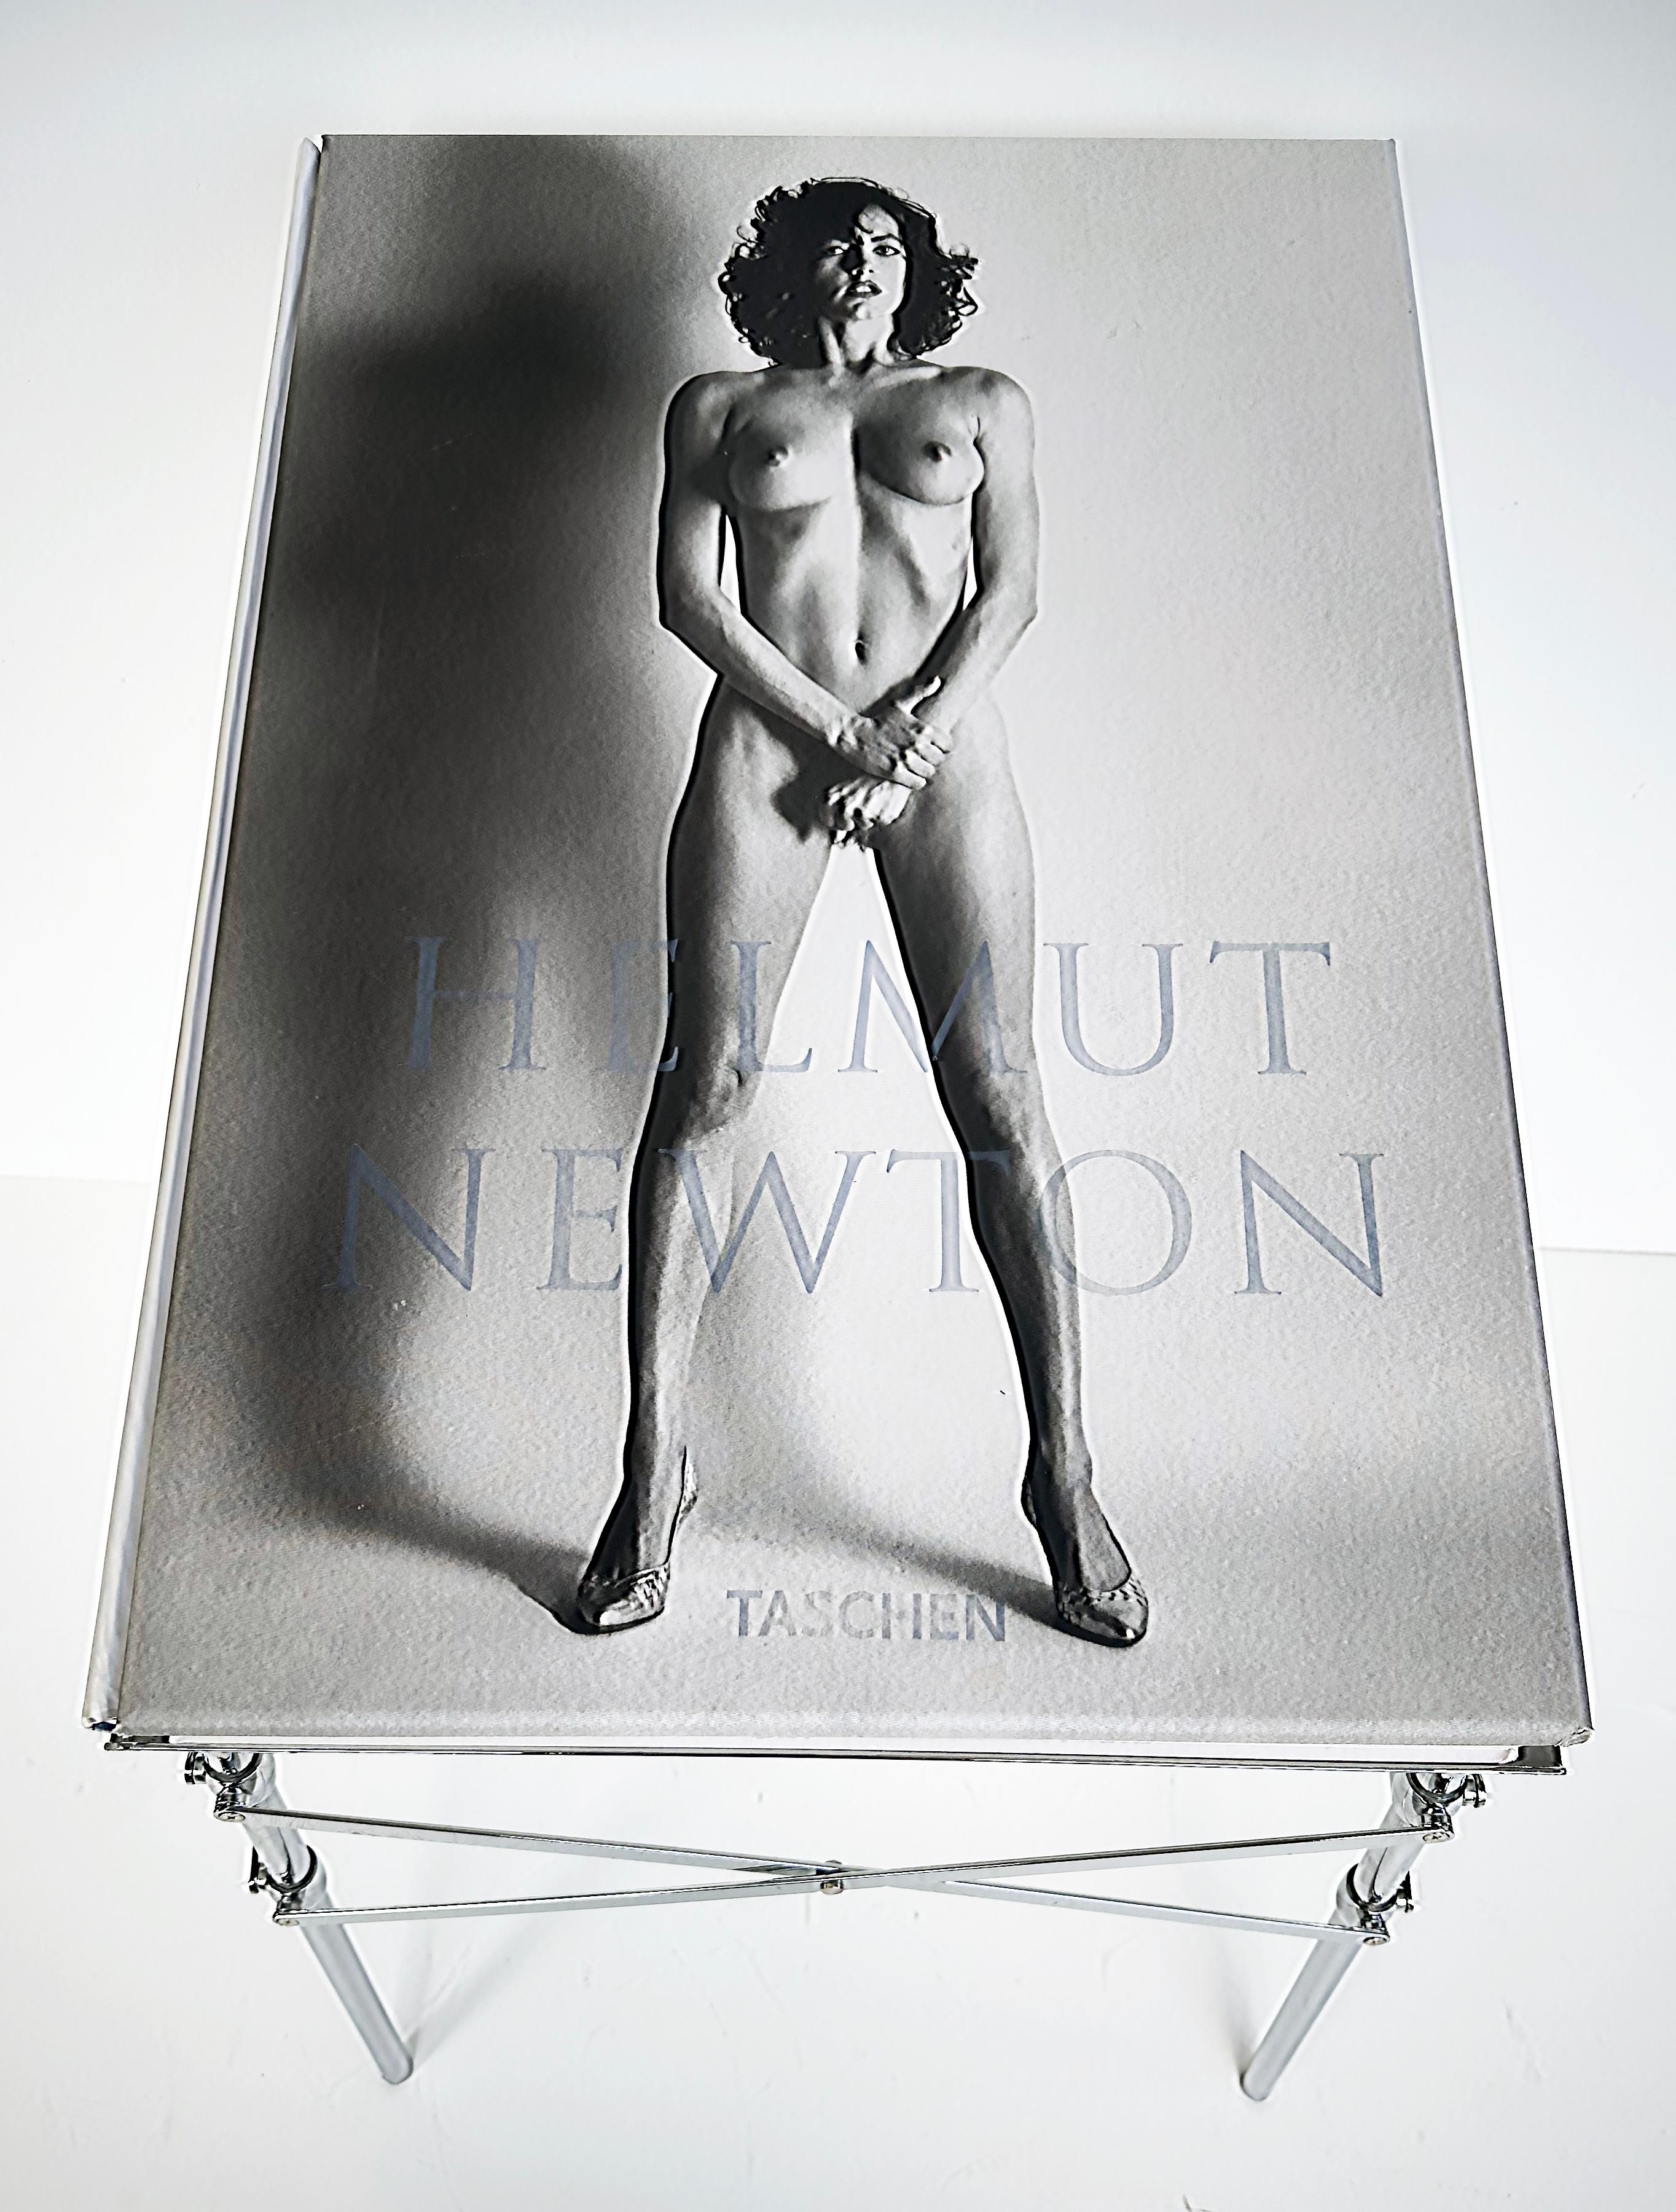 Papier Helmut Newton Sumo Taschen Book, Philippe Starck Stand, Signed Limited Edition en vente